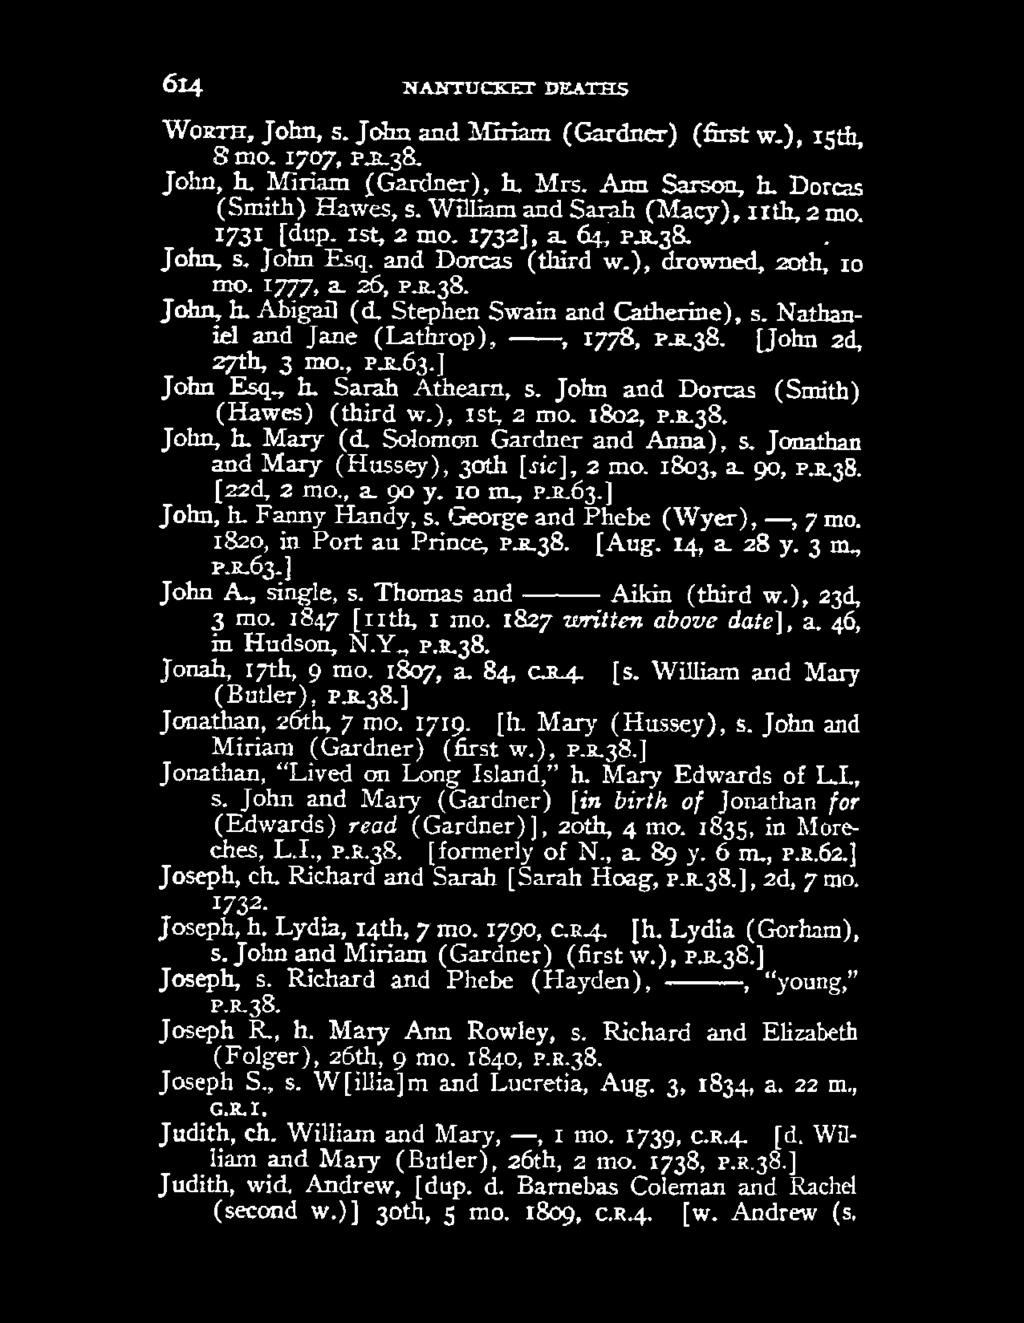 1820, in Port au Prince, P.R.J8. [Aug. 14, a. 28 y. 3m., P..R.6J.] John A., single; s. Thomas and Aikin (third w.), 23d, 3 mo. 1847 [lith, I mo. 1827 written above date], a. 46, in Hudson, N.Y., P.R.J8. Jonah, 17th, 9 mo.